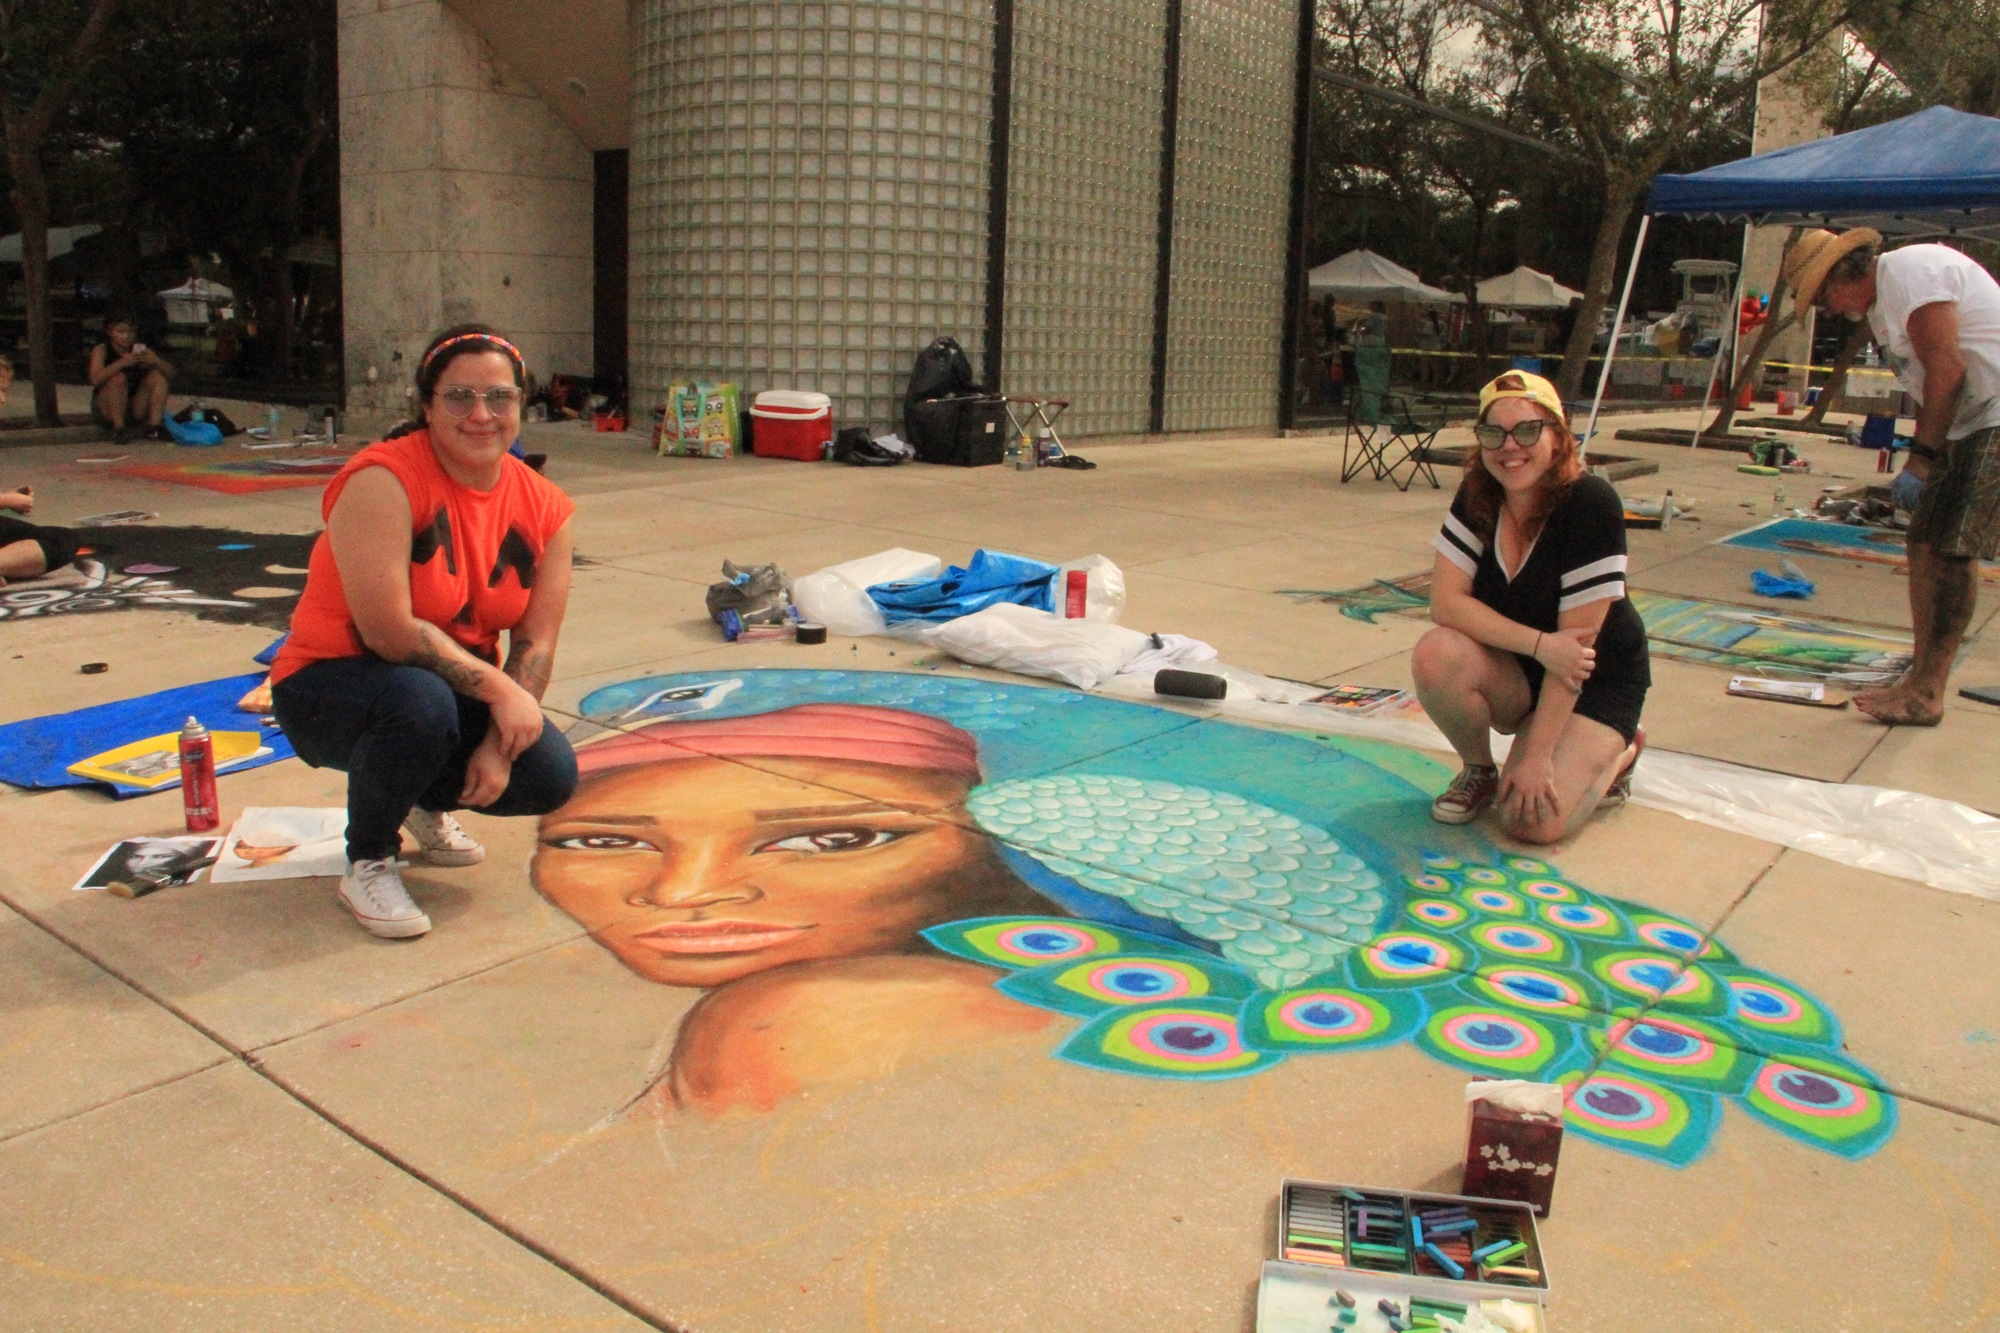 Kaylee Stewart and Sarah Beagan pose with their artwork. Photo by Nichole Osinski